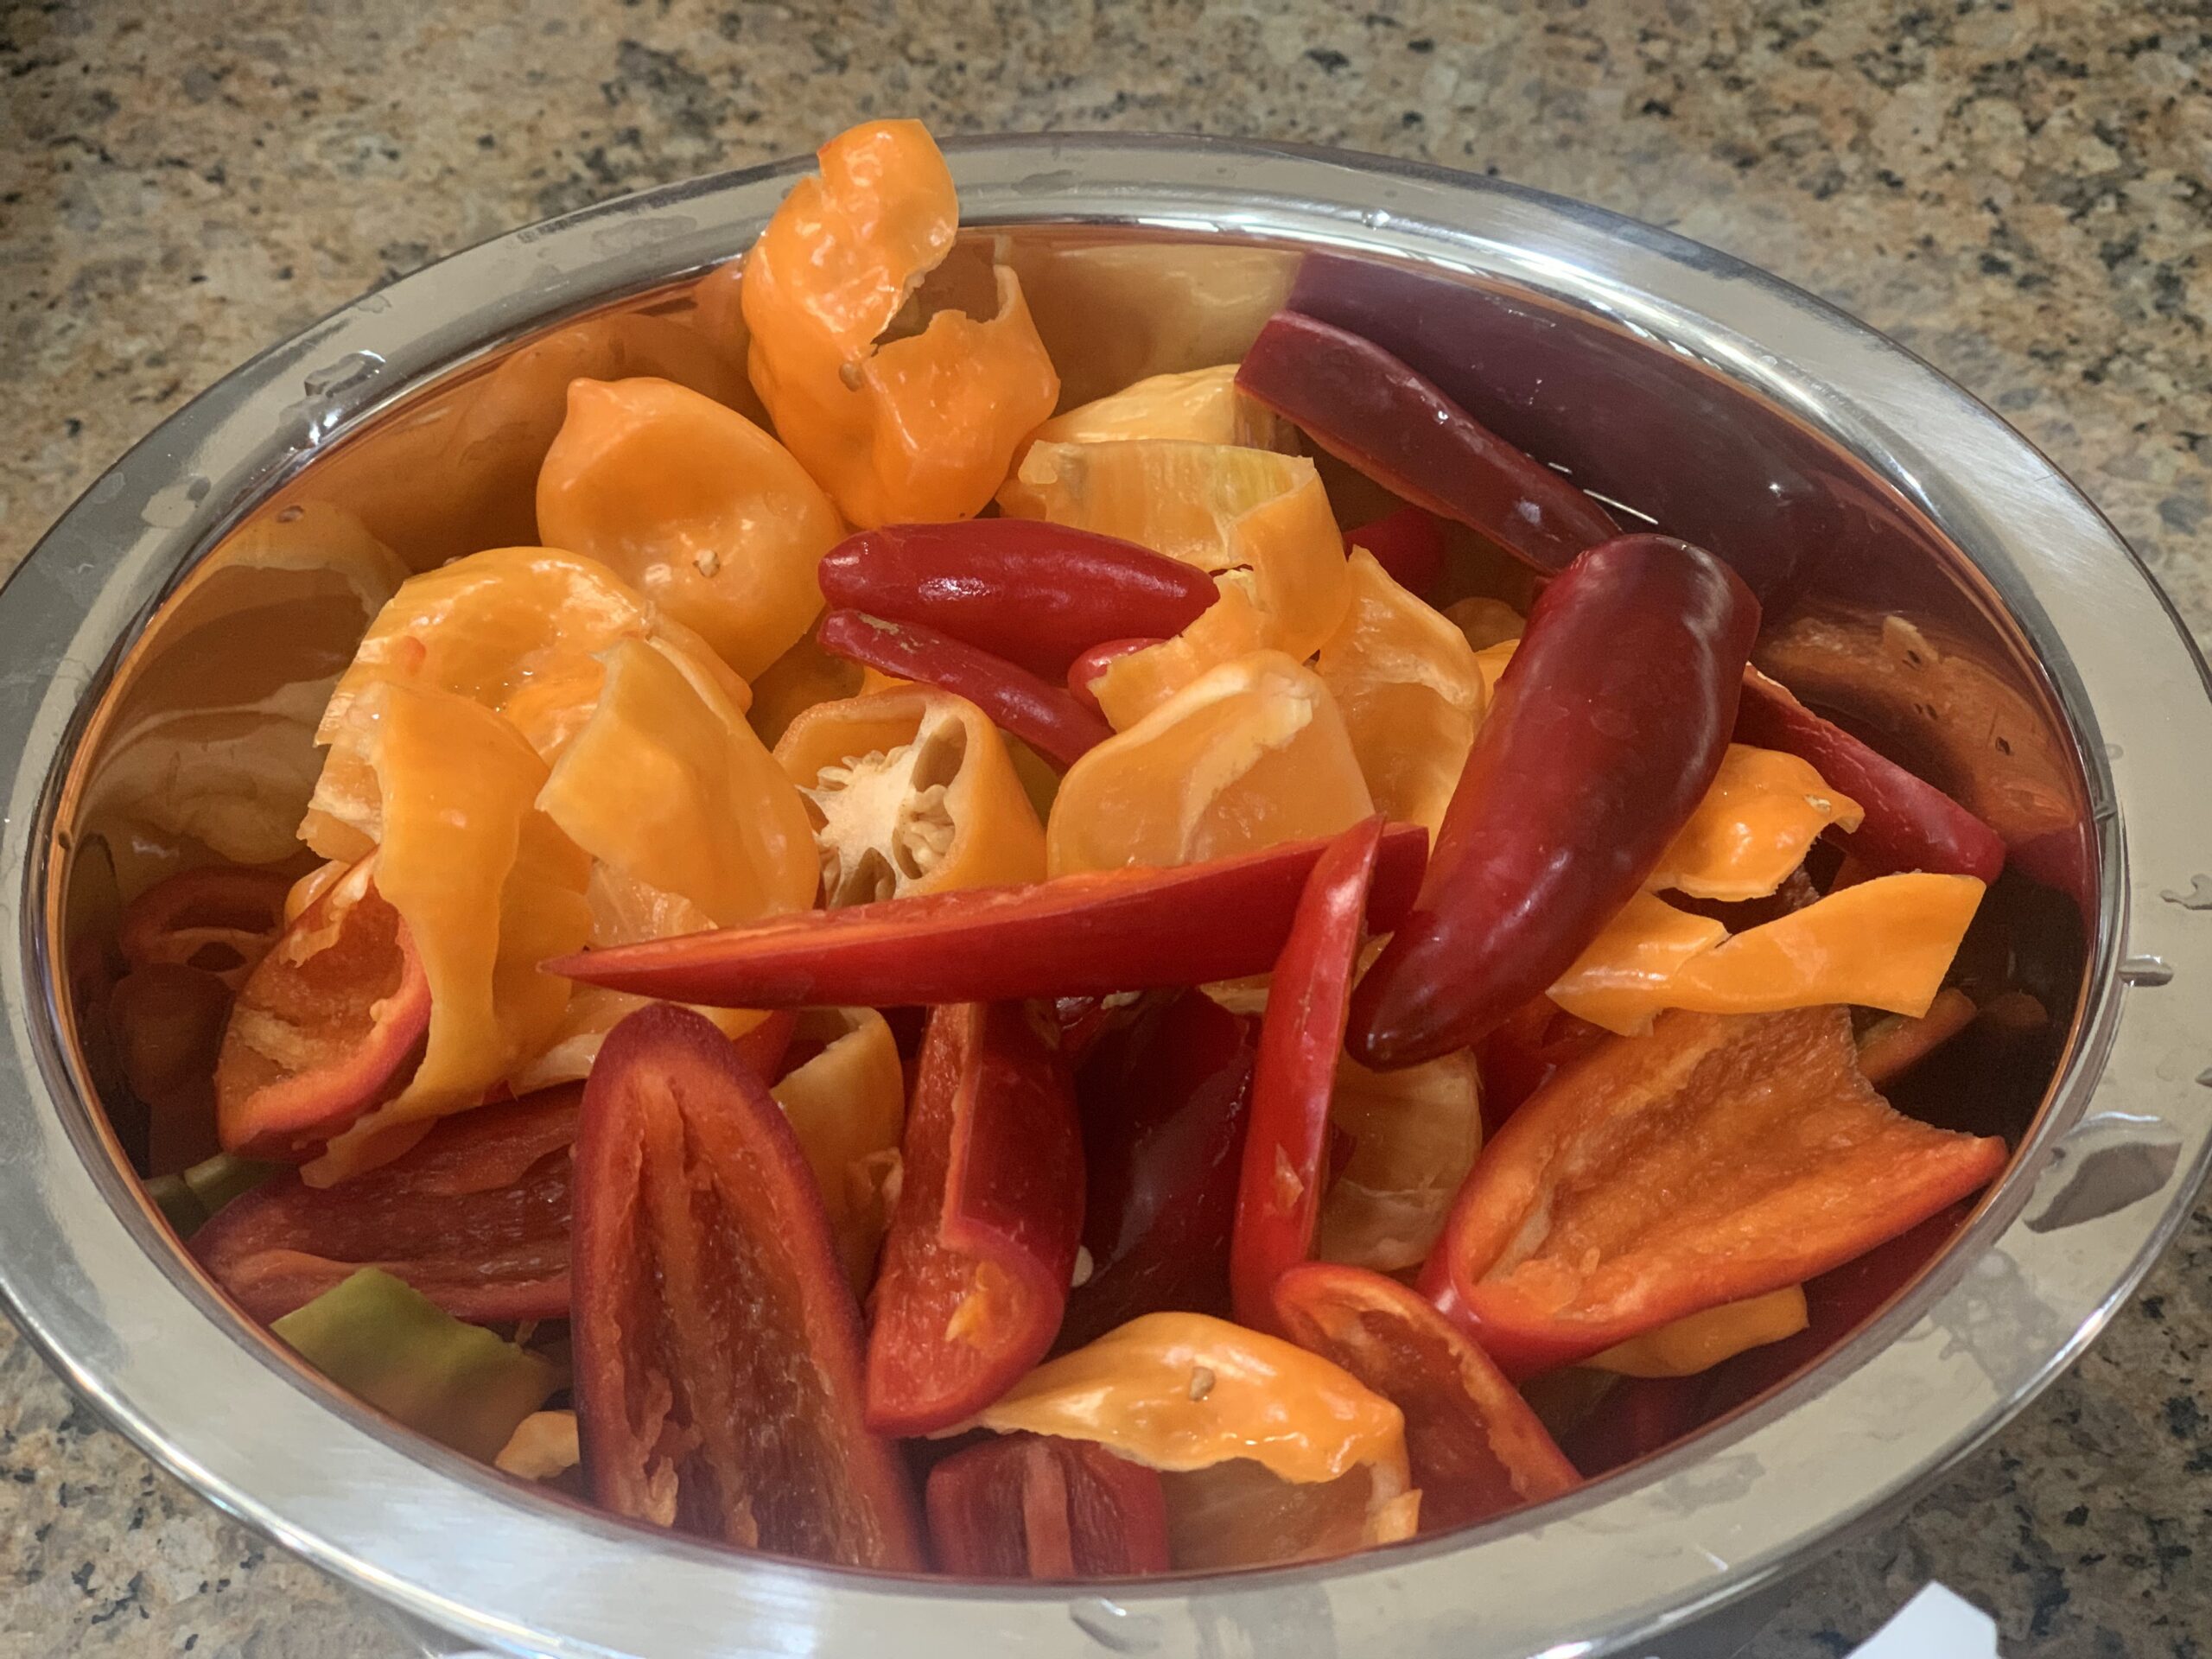 Cut habanero peppers